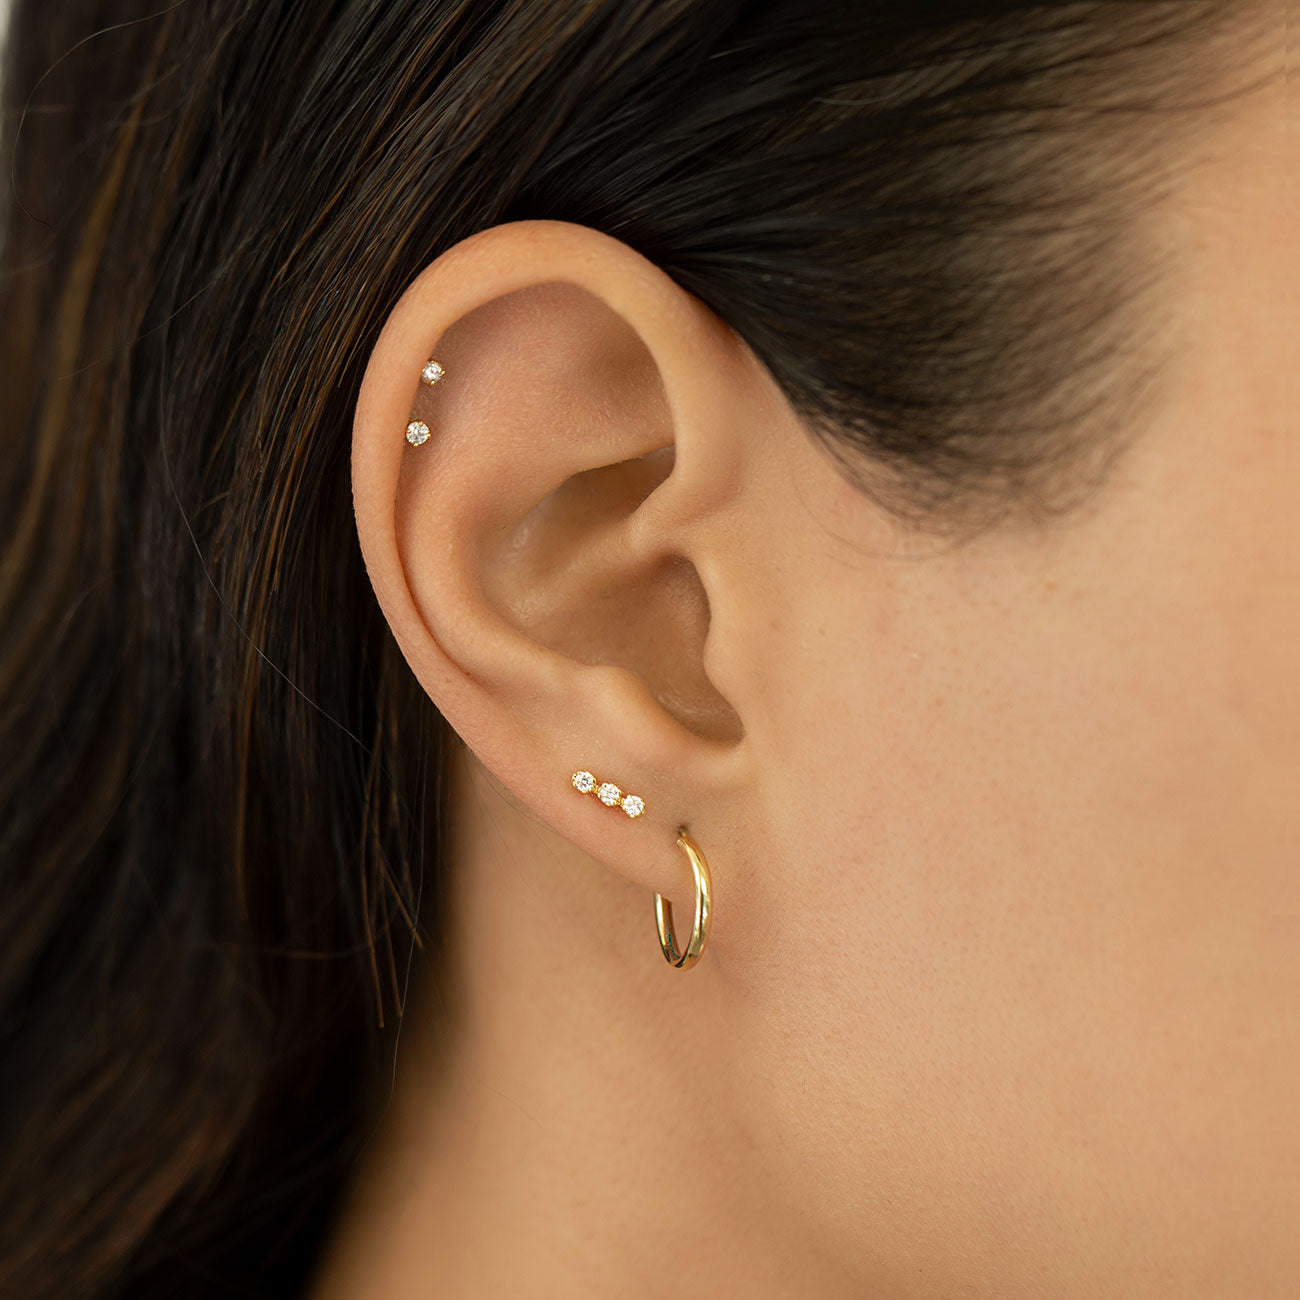 Criss Cross and Double Wire - Cartilage Ear Cuff Set - EC648/EC647 –  Chapman Jewelry